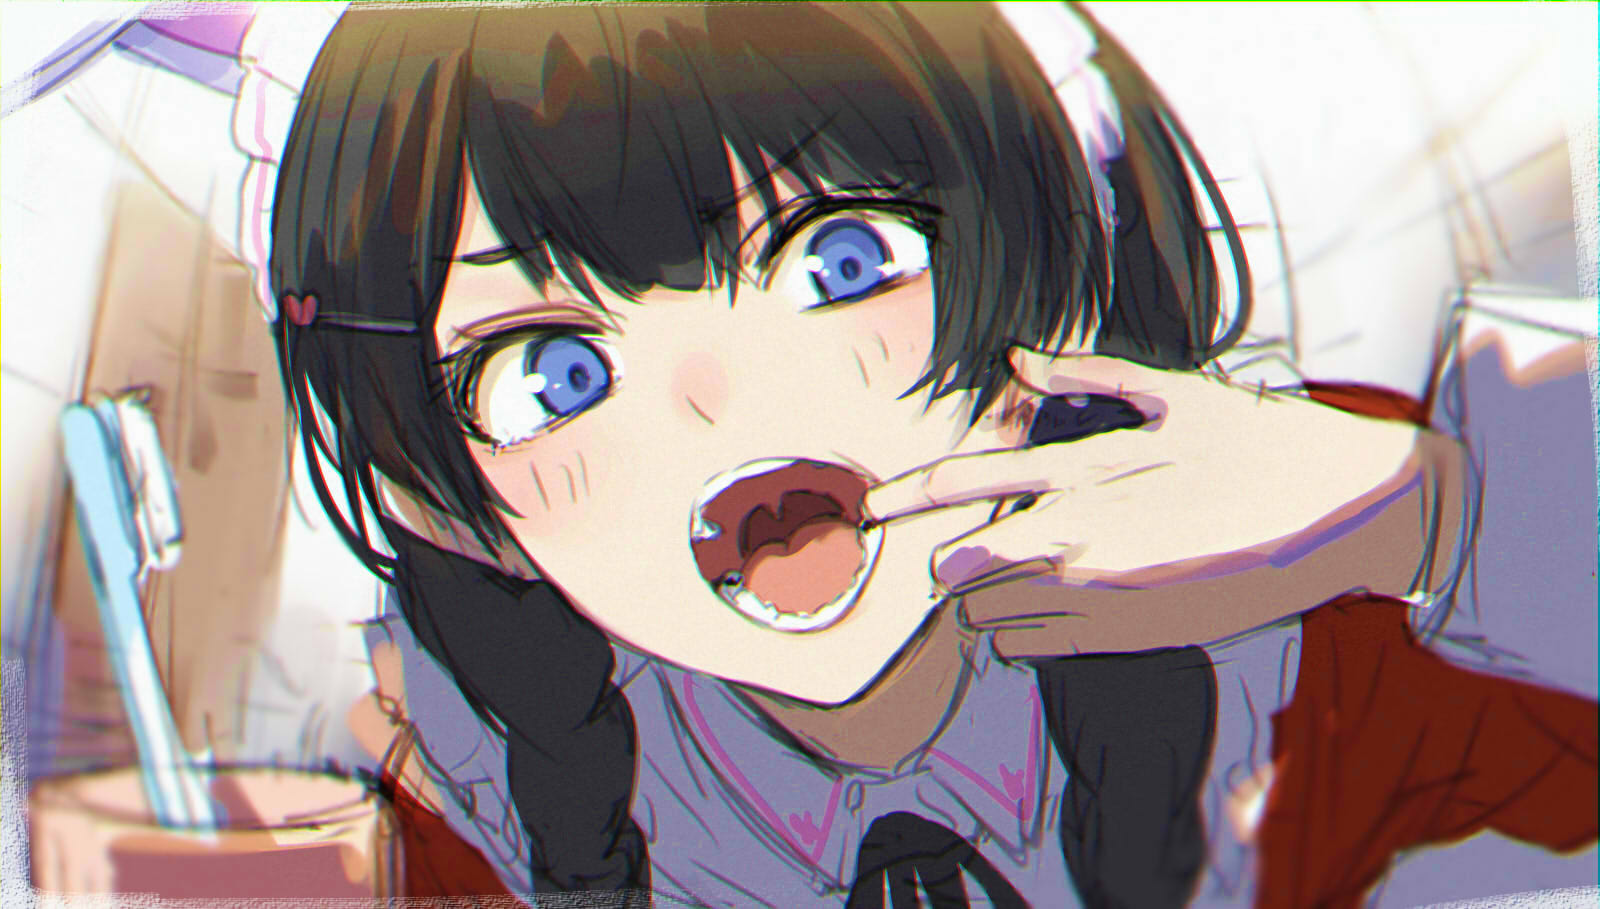 Isshiki Blue Eyes Open Mouth Teeth Tongues Anime Anime Girls Digital Art Artwork 2d 